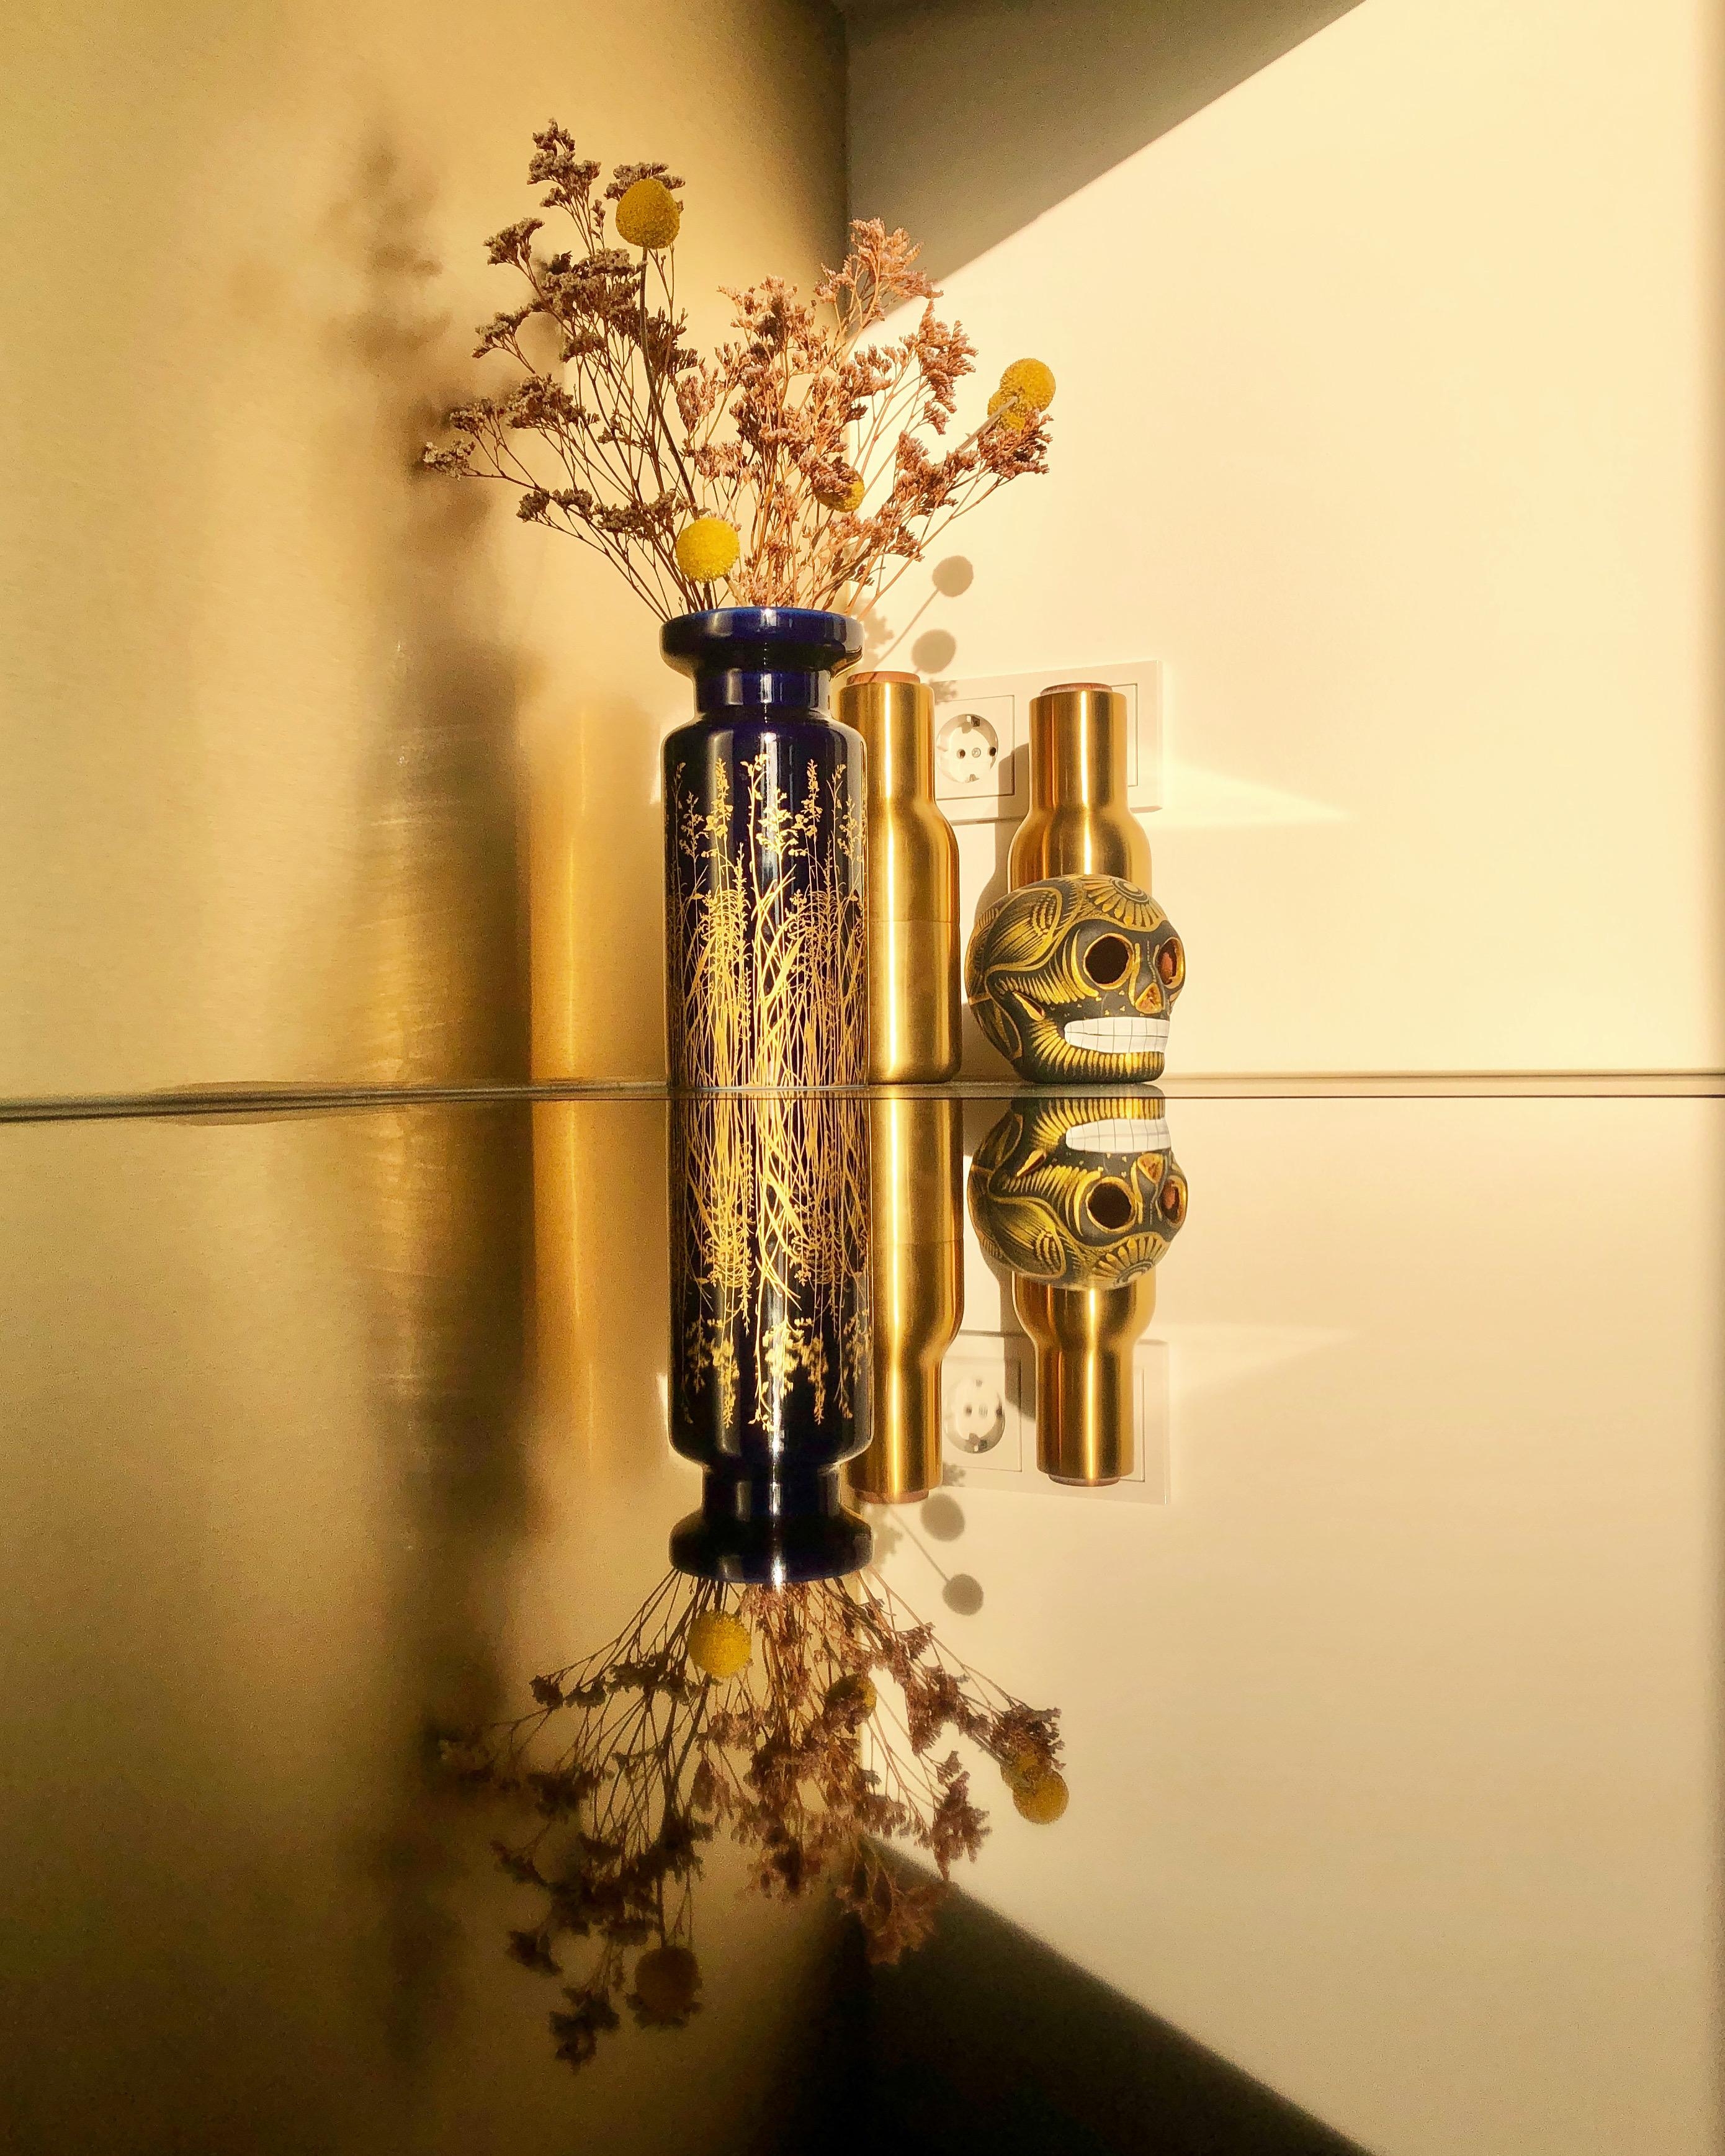 Doppelte #Vasenliebe ☺️ #trockenblumen #vintagevase #küche #golden